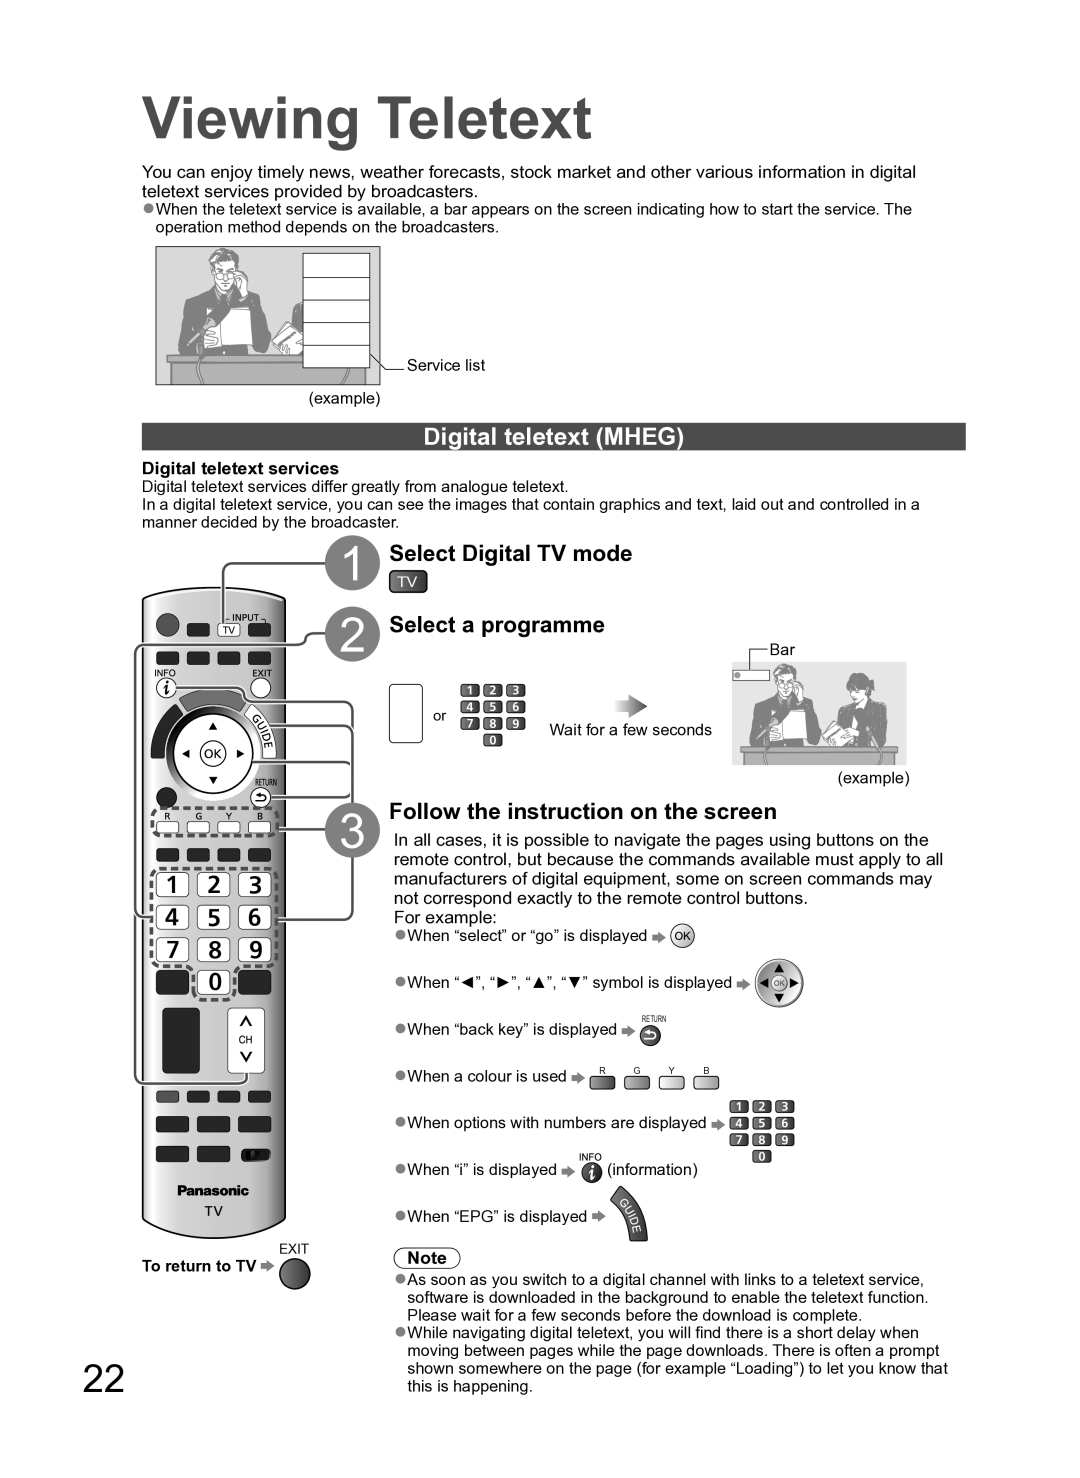 Panasonic TH-P54Z10H manual Viewing Teletext, Digital teletext Mheg, Select Digital TV mode Select a programme 